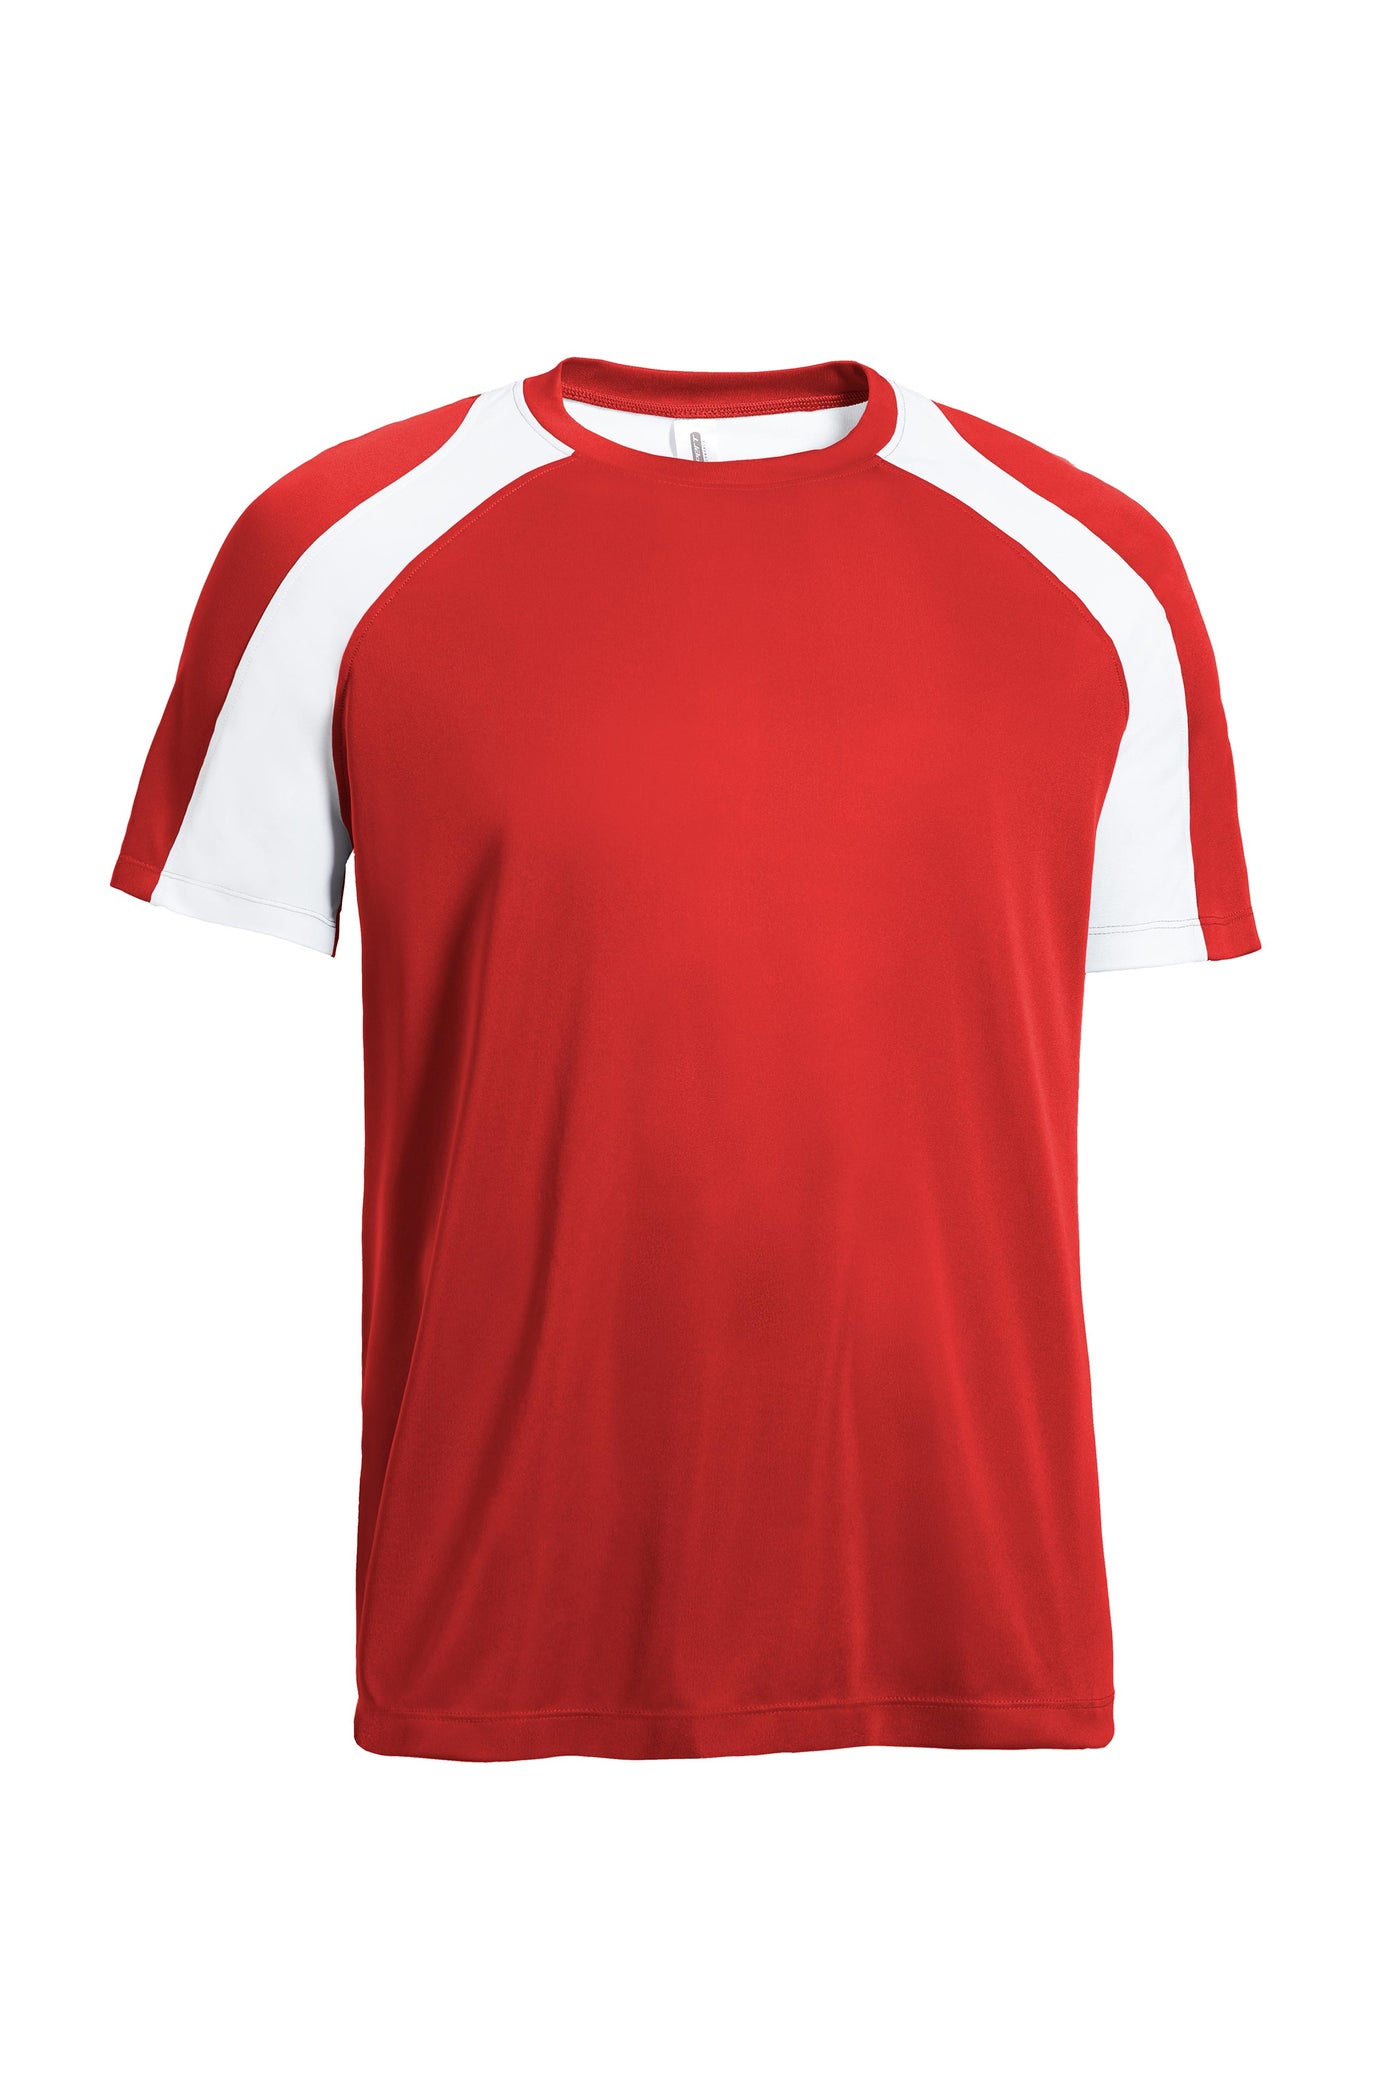 Expert Apparel Retail Men's Pk Max™ Freefall Colorblock Raglan Performance Tee Red#color_red